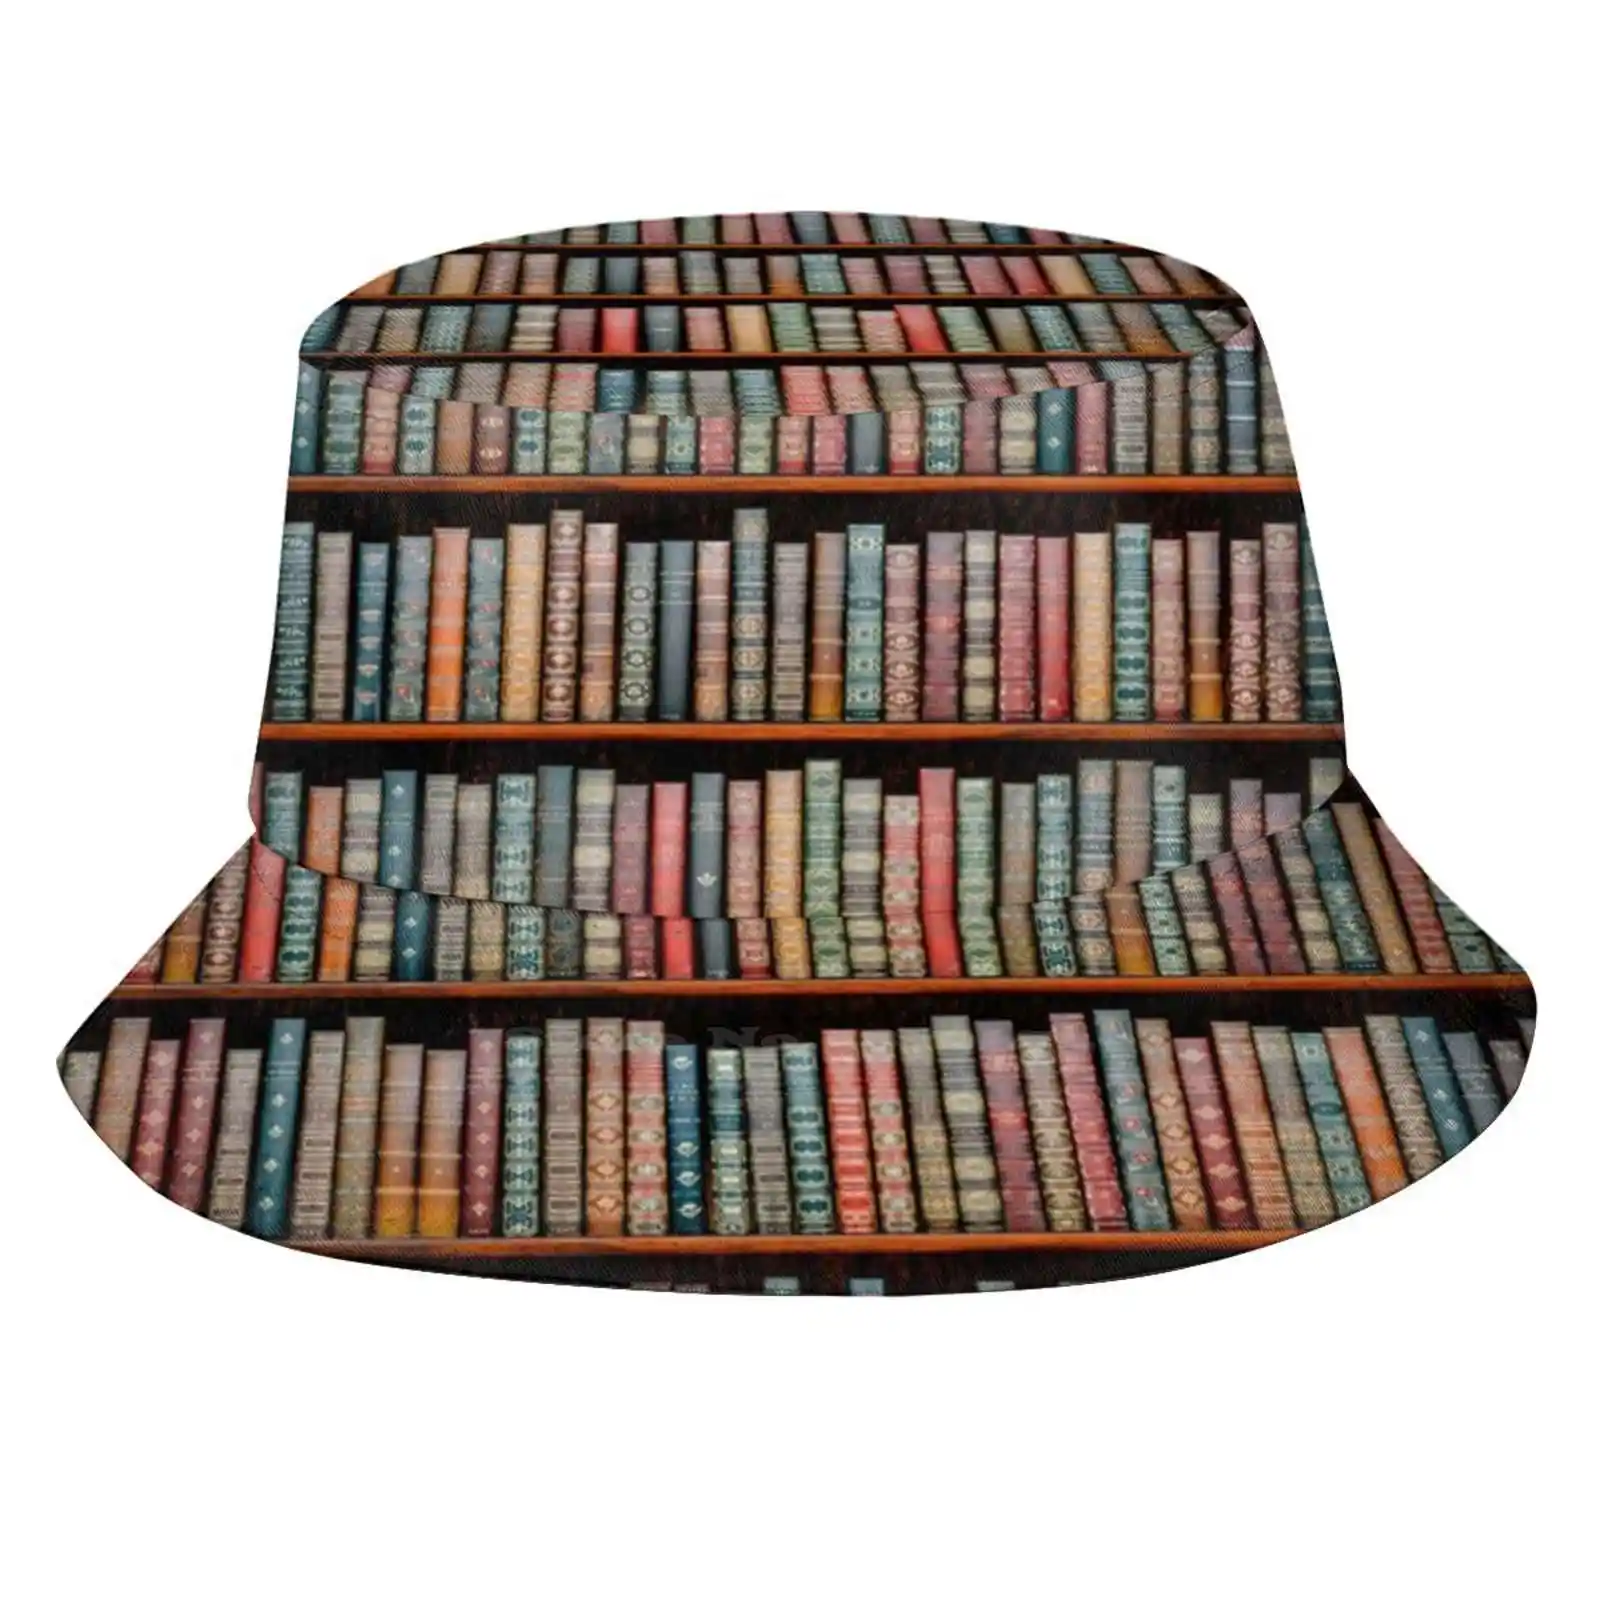 

The Library Korean Caps Funny Beach Bucket Hats Reading Lover Bookish Nerd Geek Bookworm Reader Librarian Literature